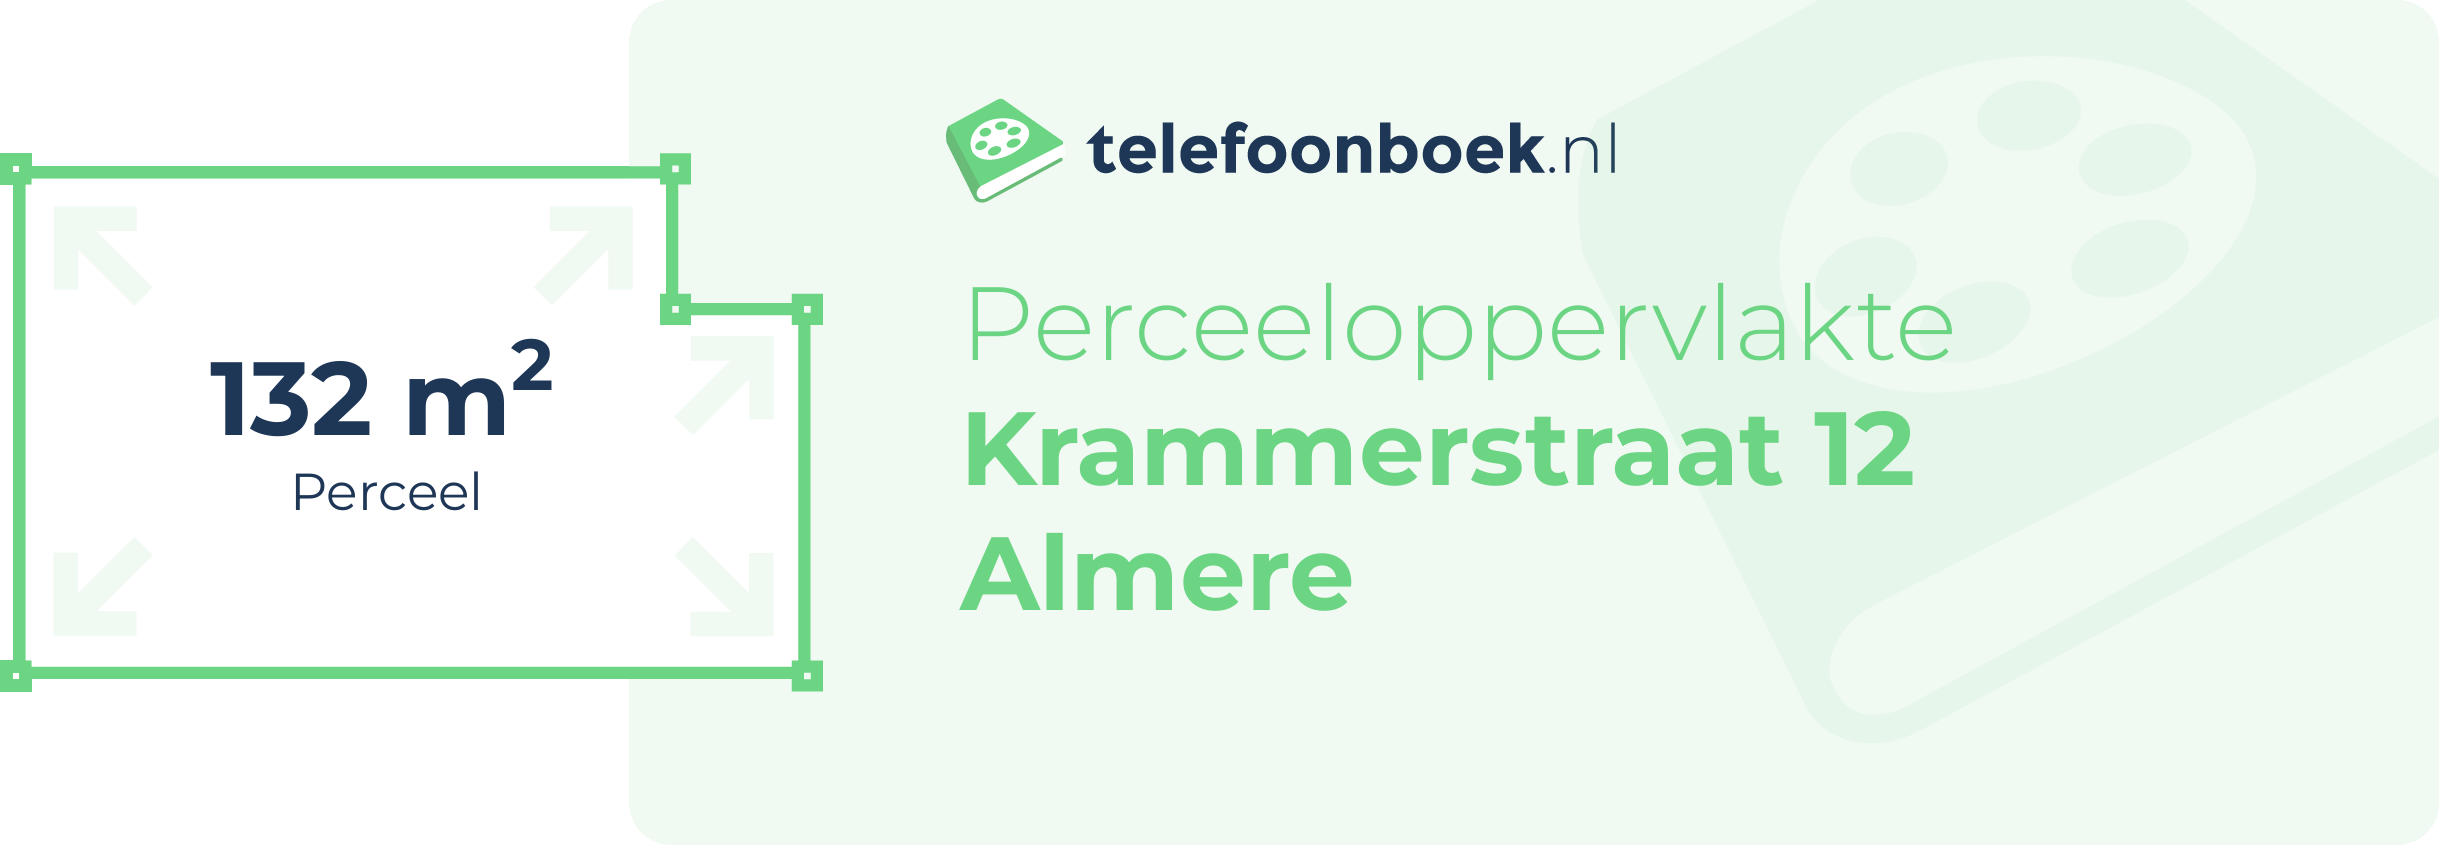 Perceeloppervlakte Krammerstraat 12 Almere